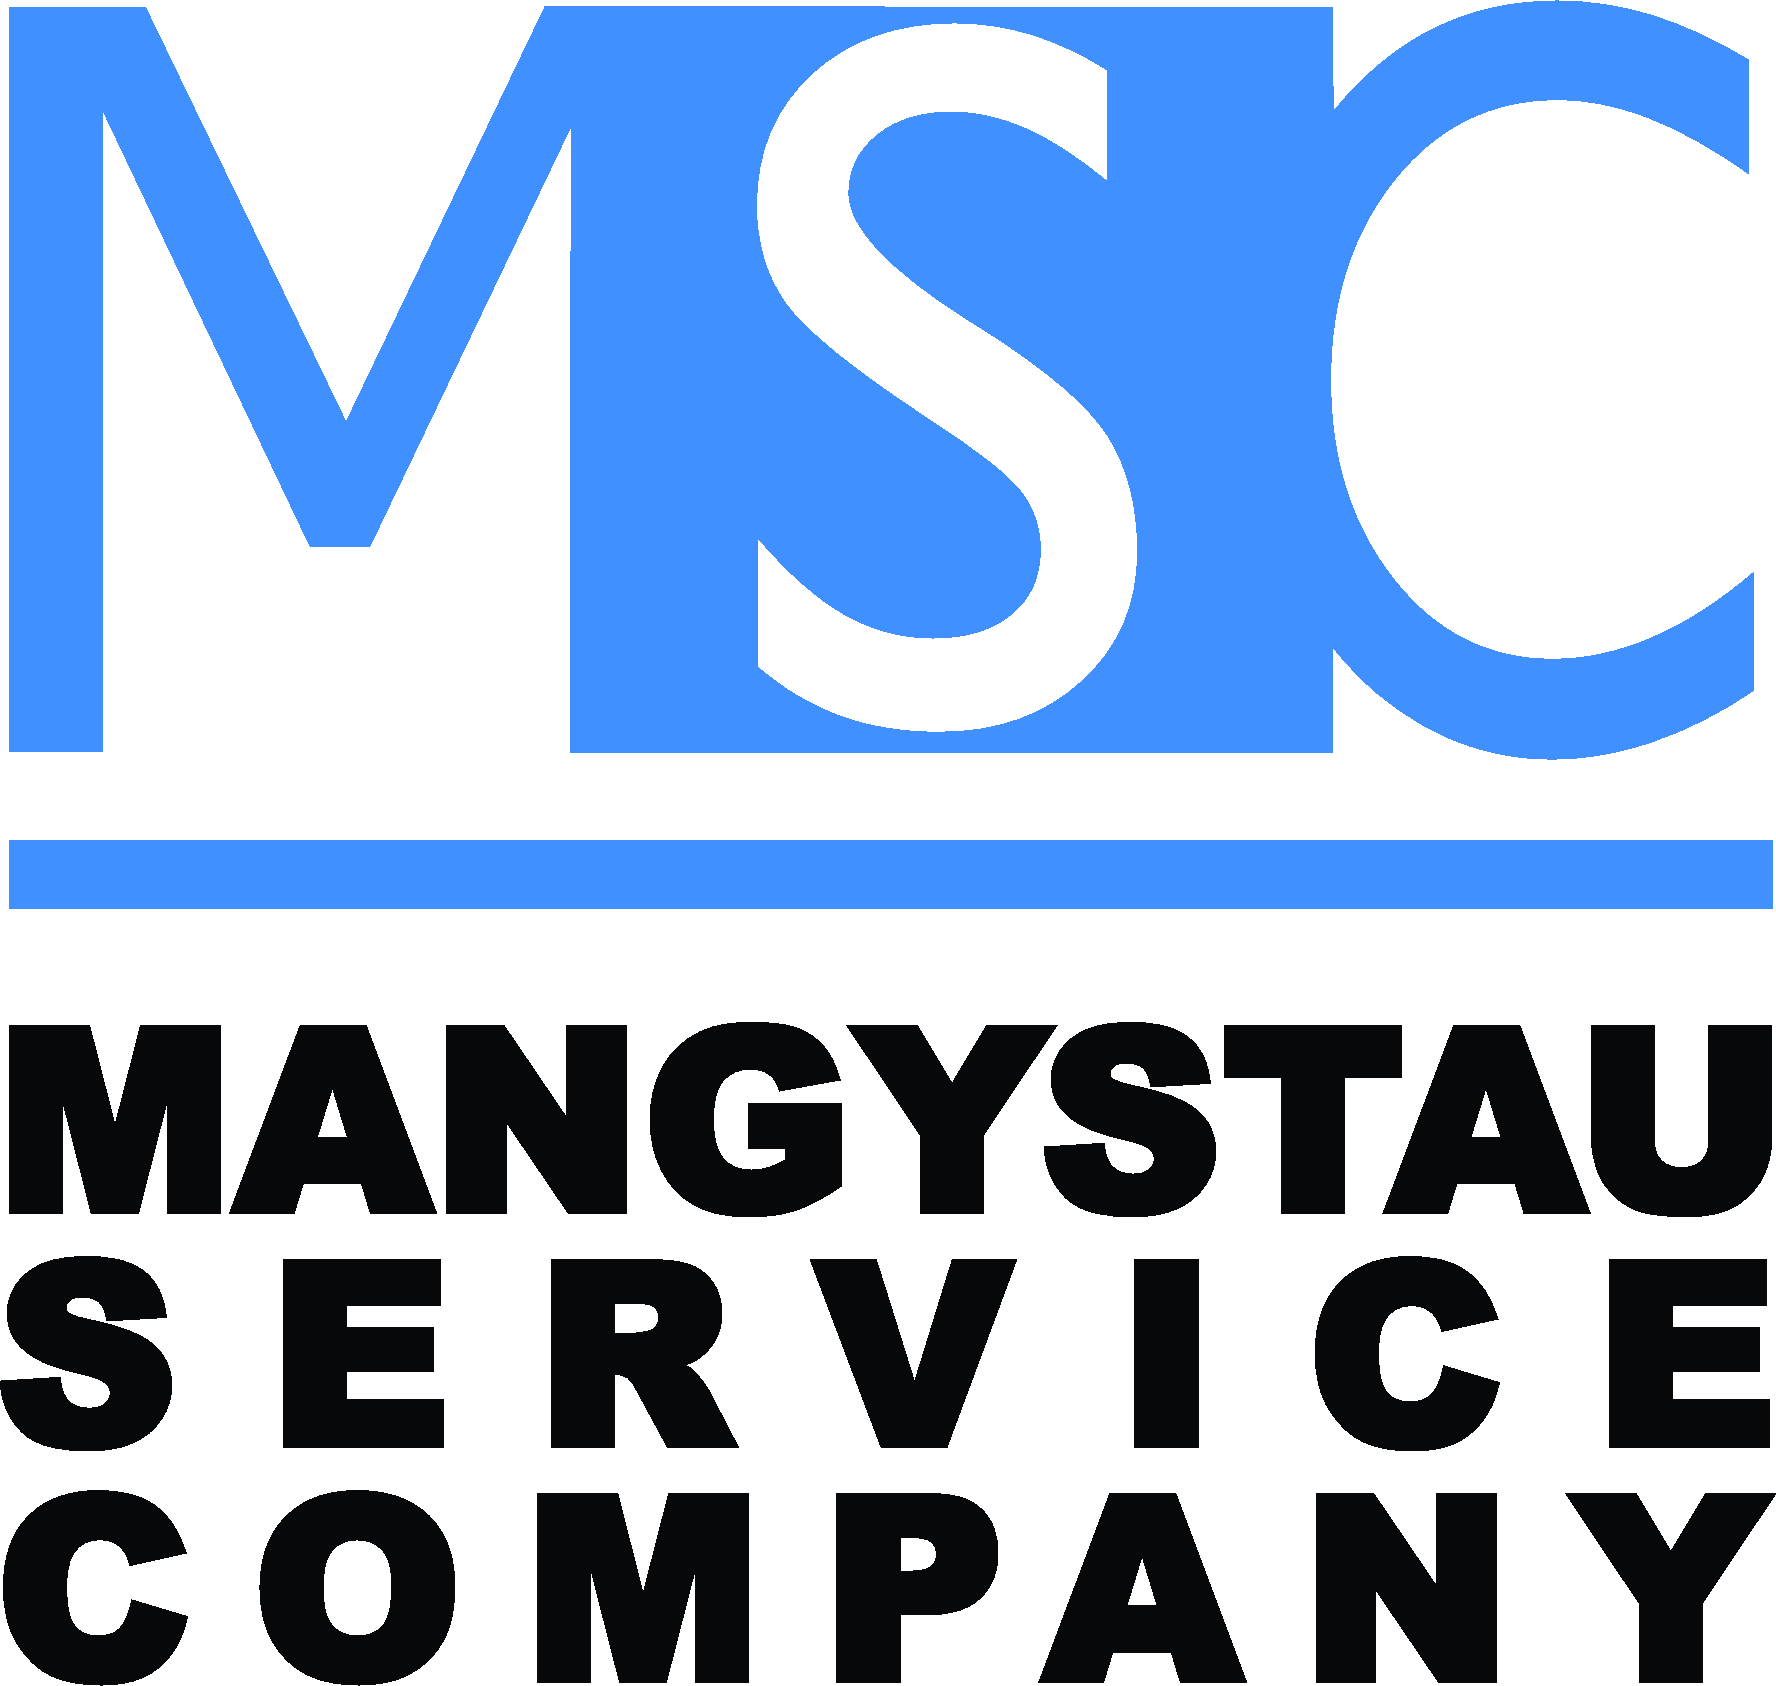 Mangystau Service Company